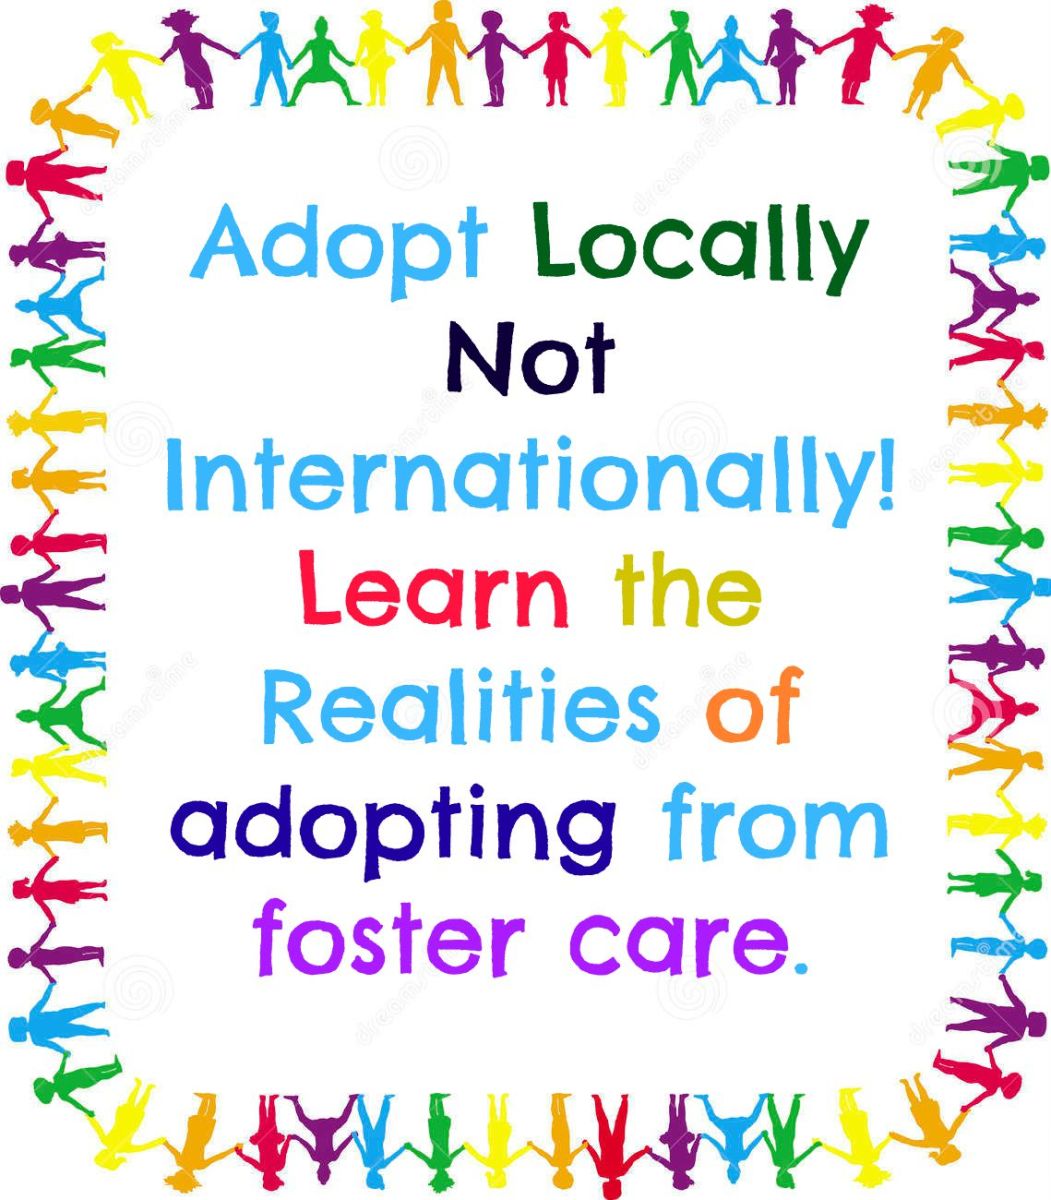 adopt-locally-not-internationally